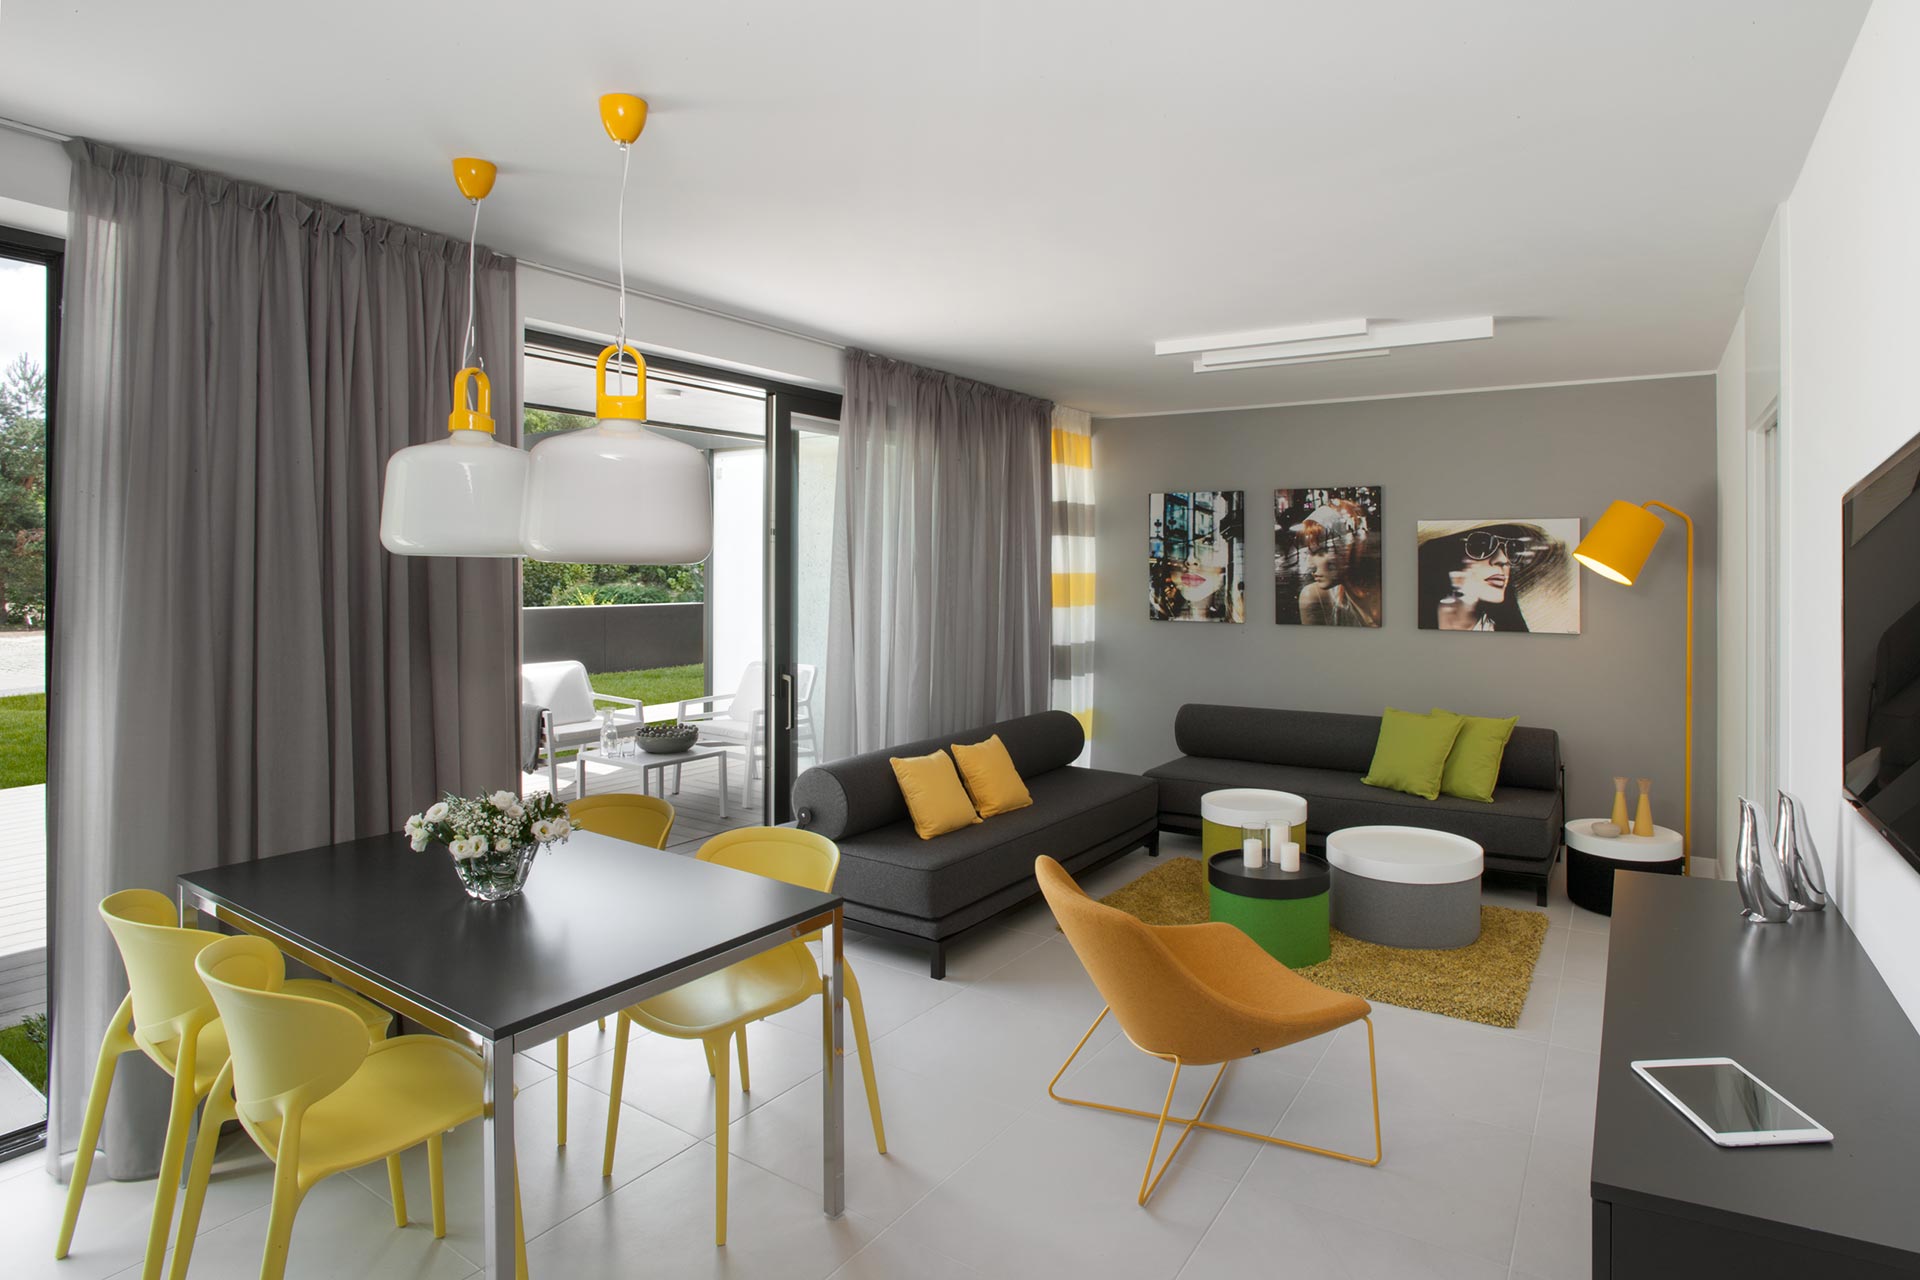 ROSEVIA Baltic Sea Apartments comfortable accommodation Poland